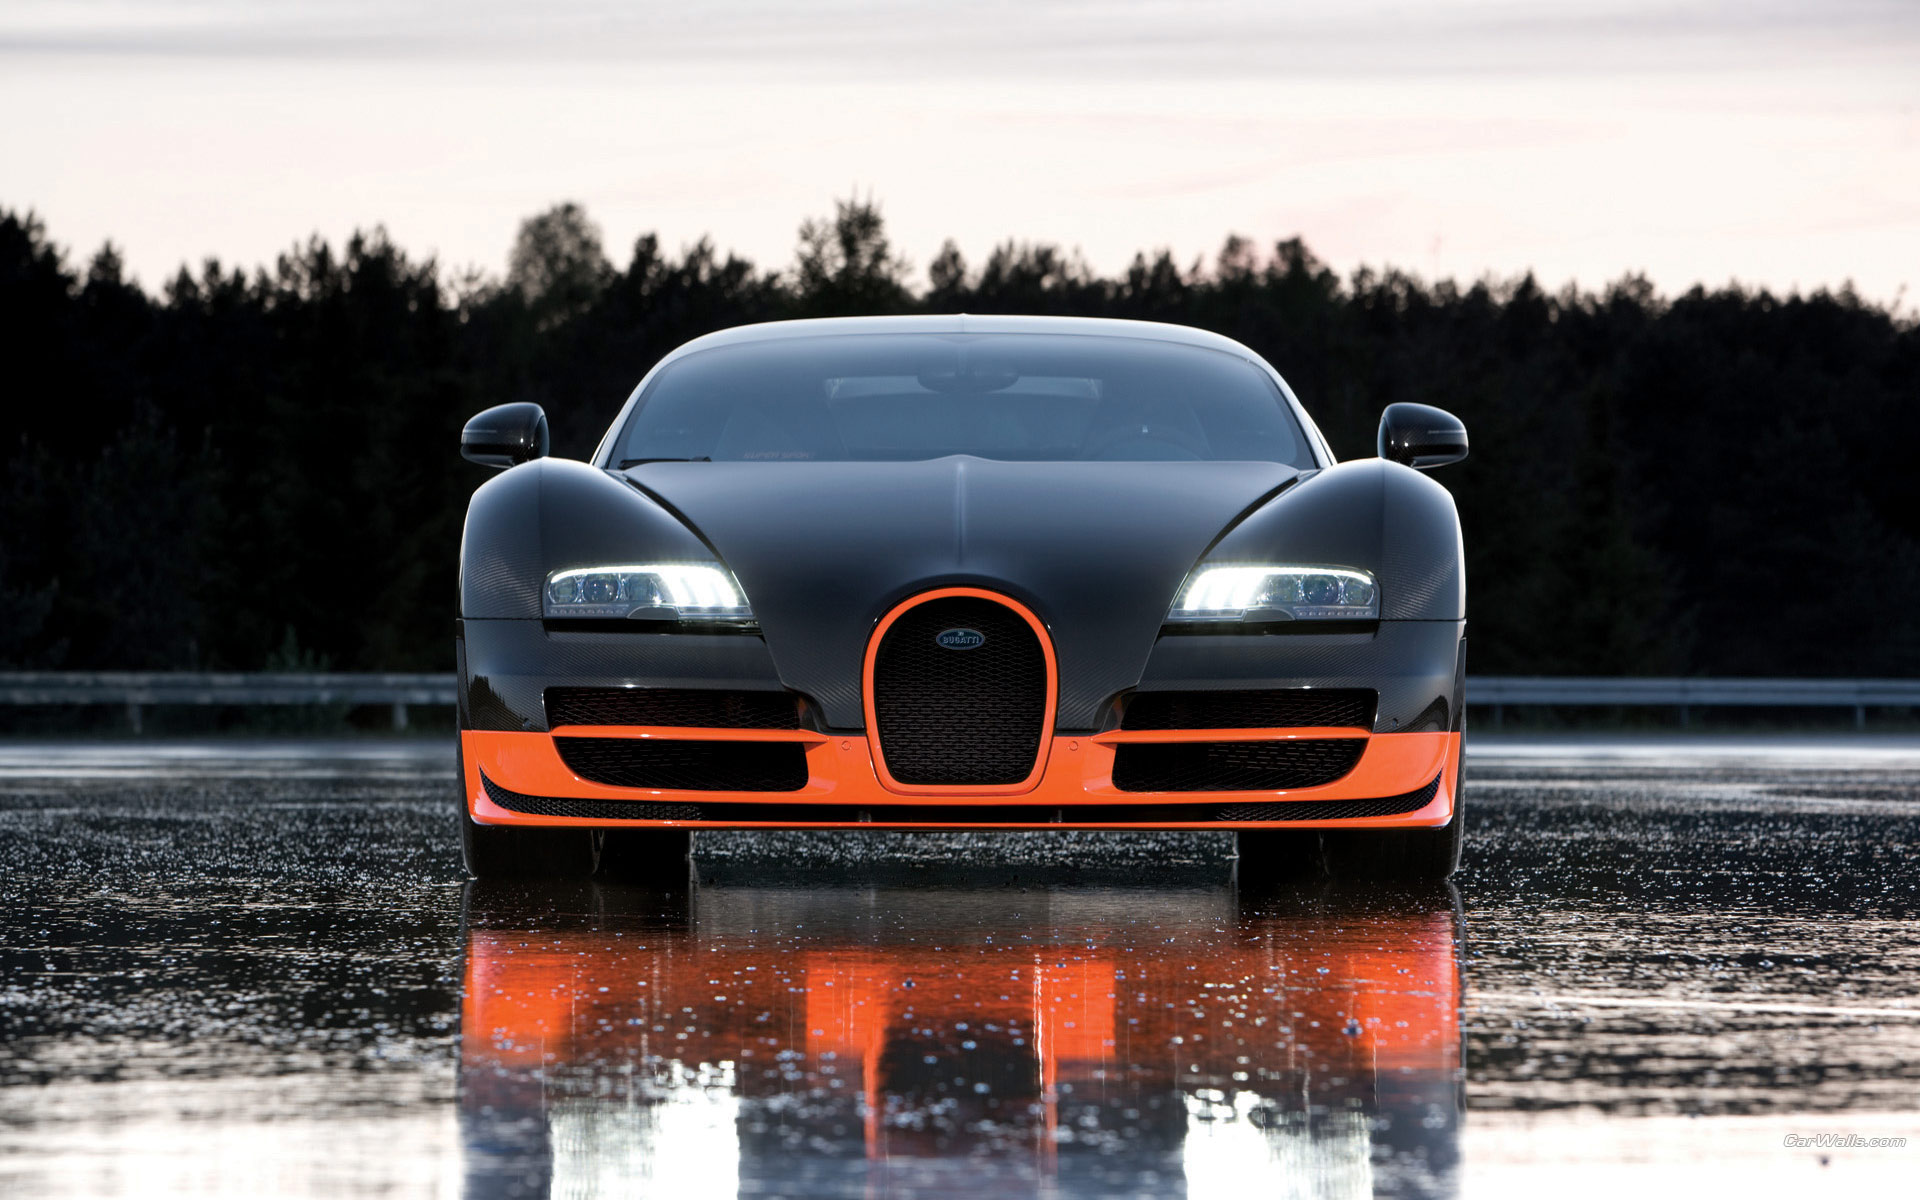 автомобили, Bugatti Veyron - обои на рабочий стол